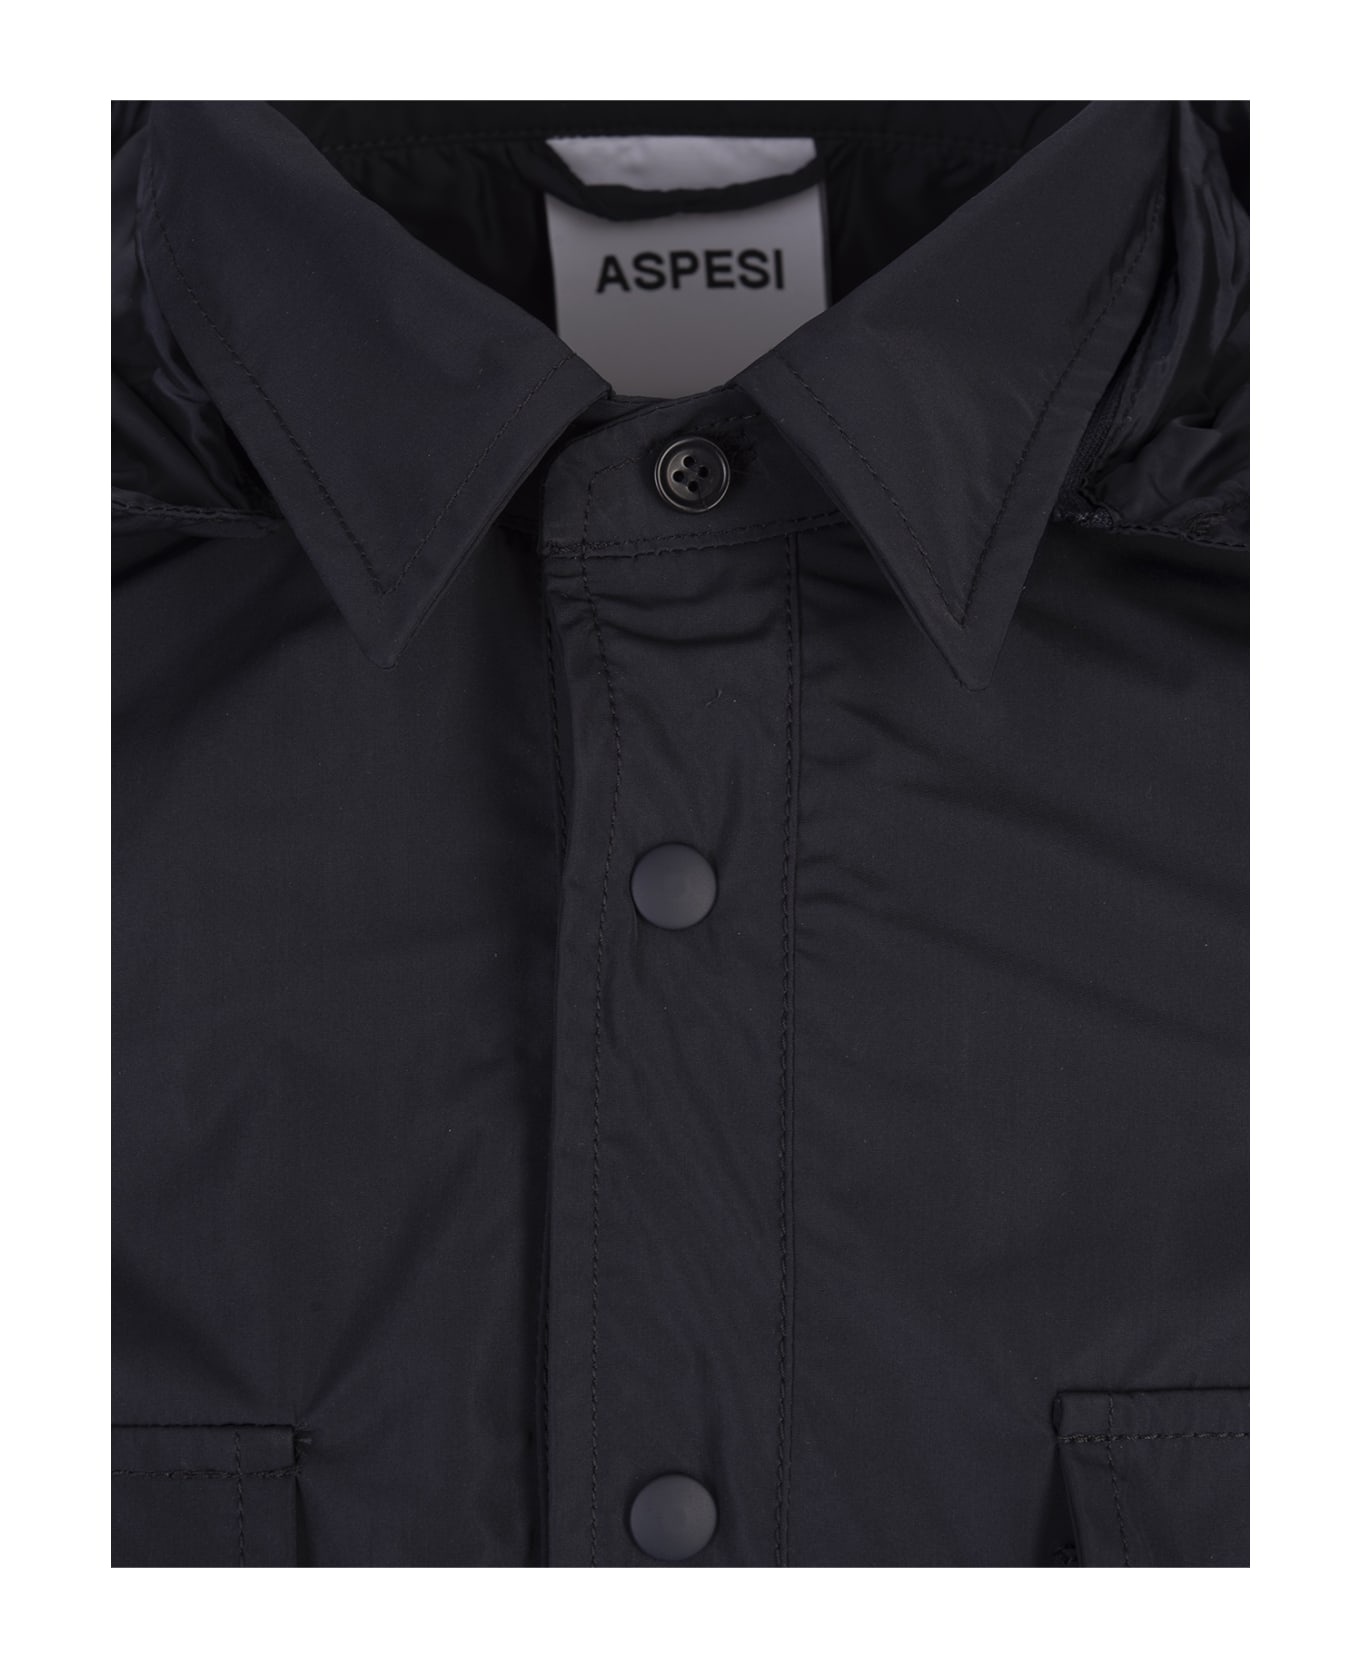 Aspesi Black Hooded Shirt Jacket - Black